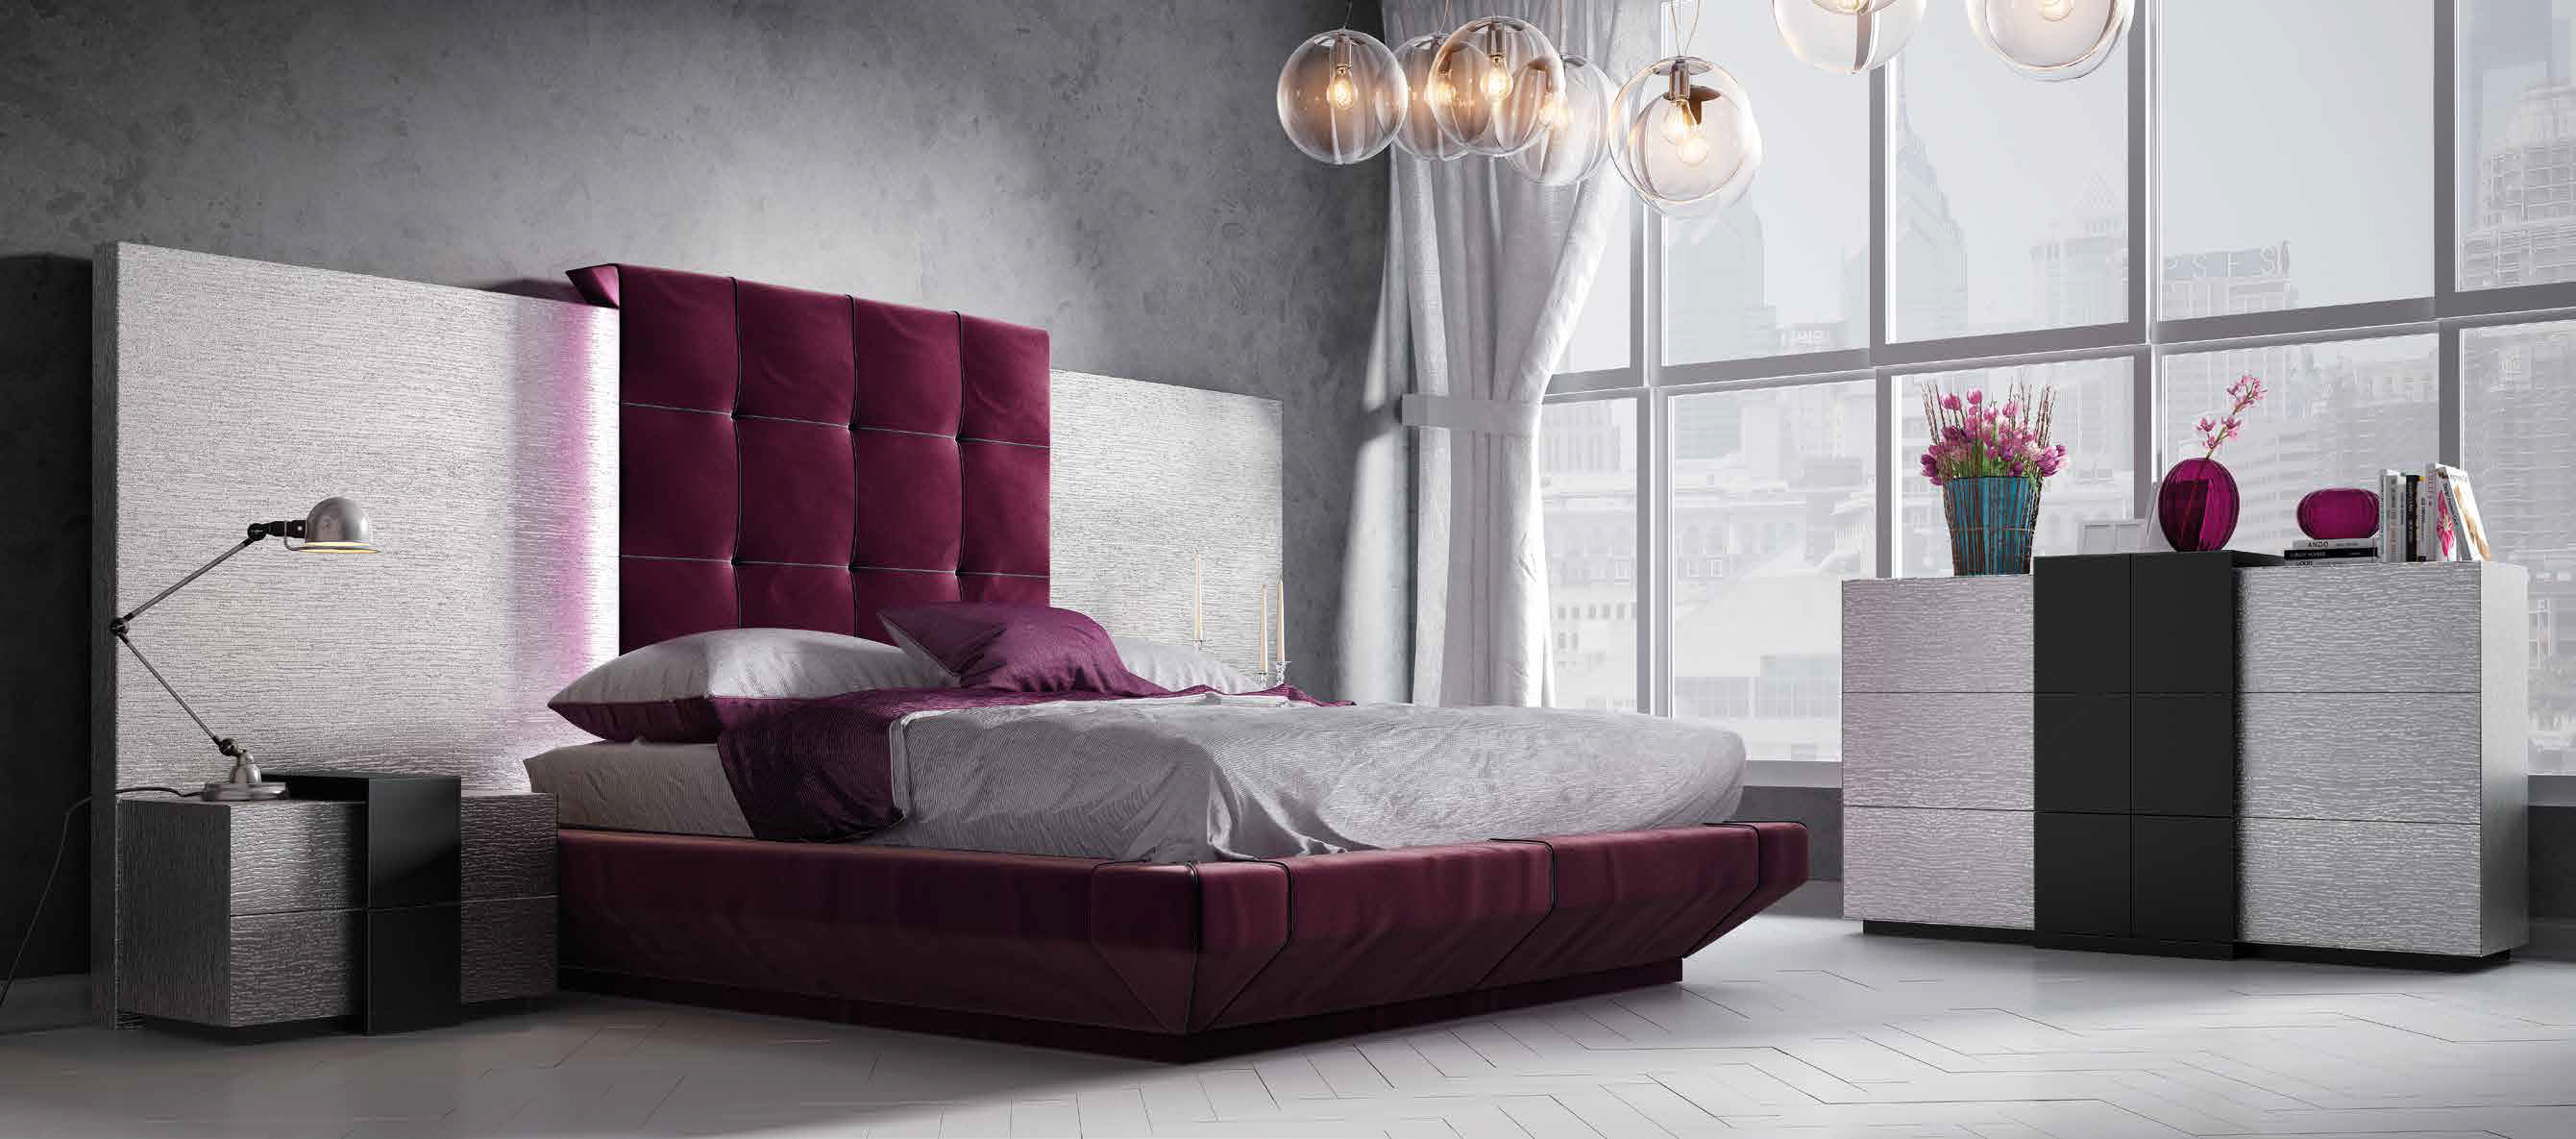 Brands Franco Furniture Bedrooms vol2, Spain DOR 08